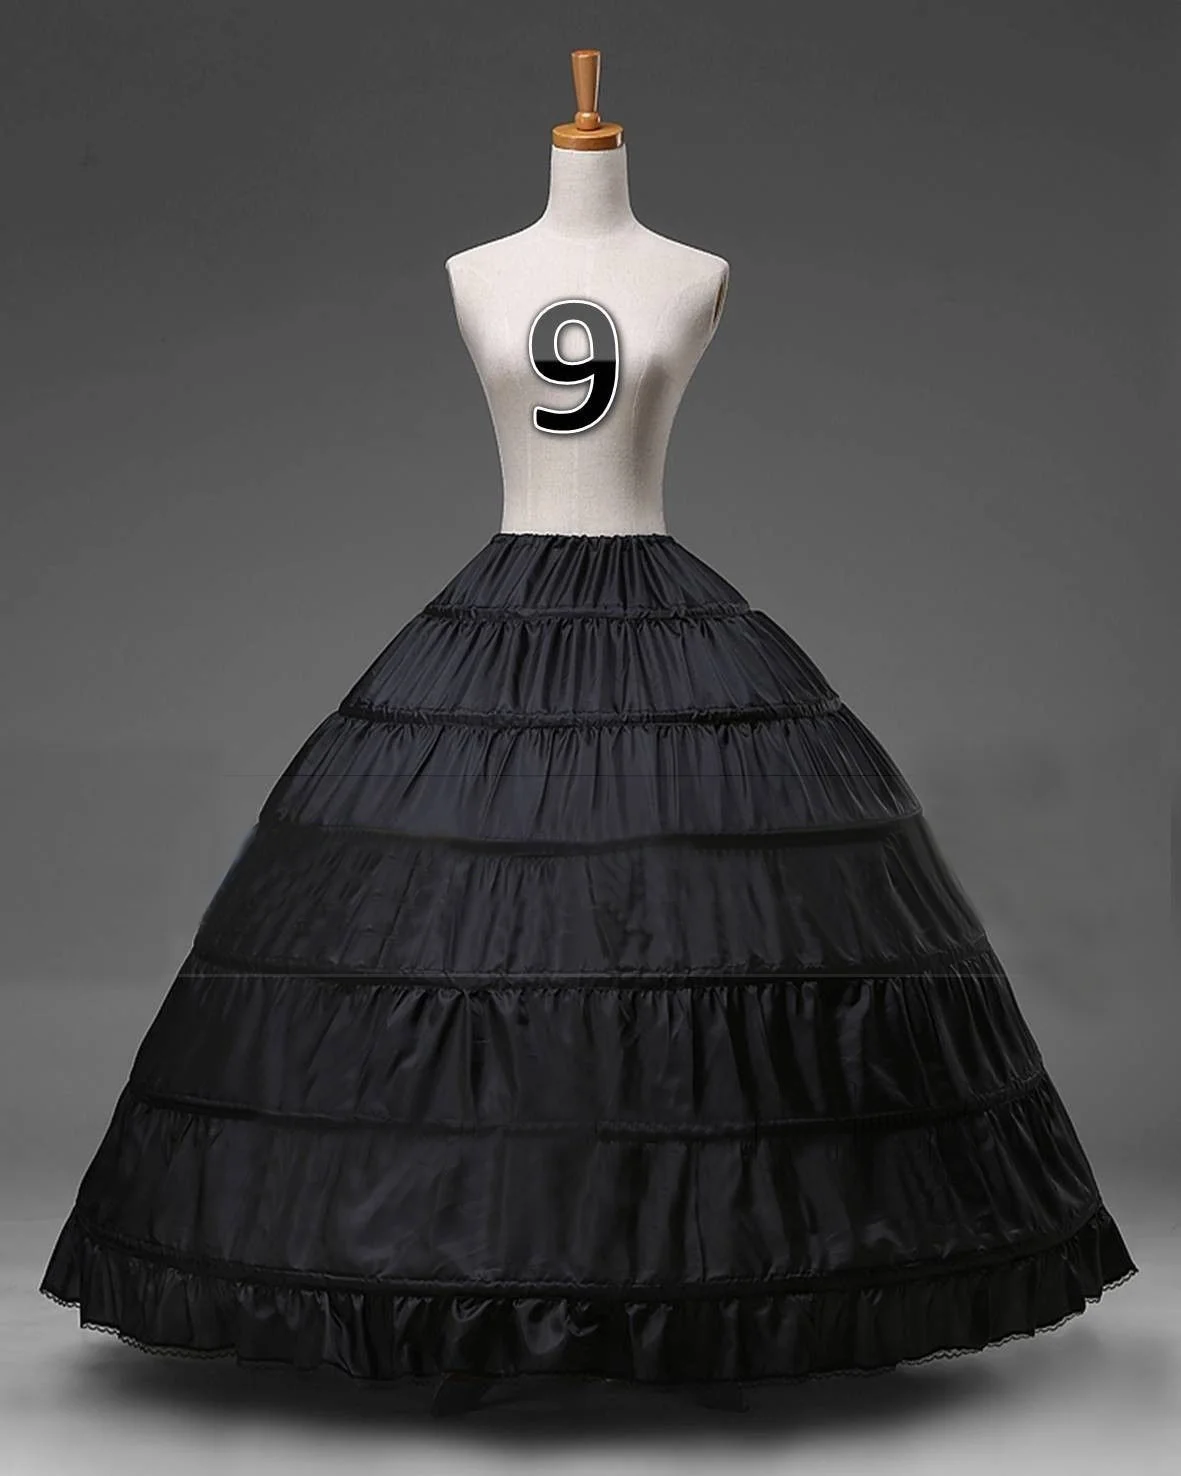 SHEWG YI DRESS Black Bridal Petticoat Crinoline Underskirt Hoophooplessmermaidfishtail -Outlet Maid Outfit Store